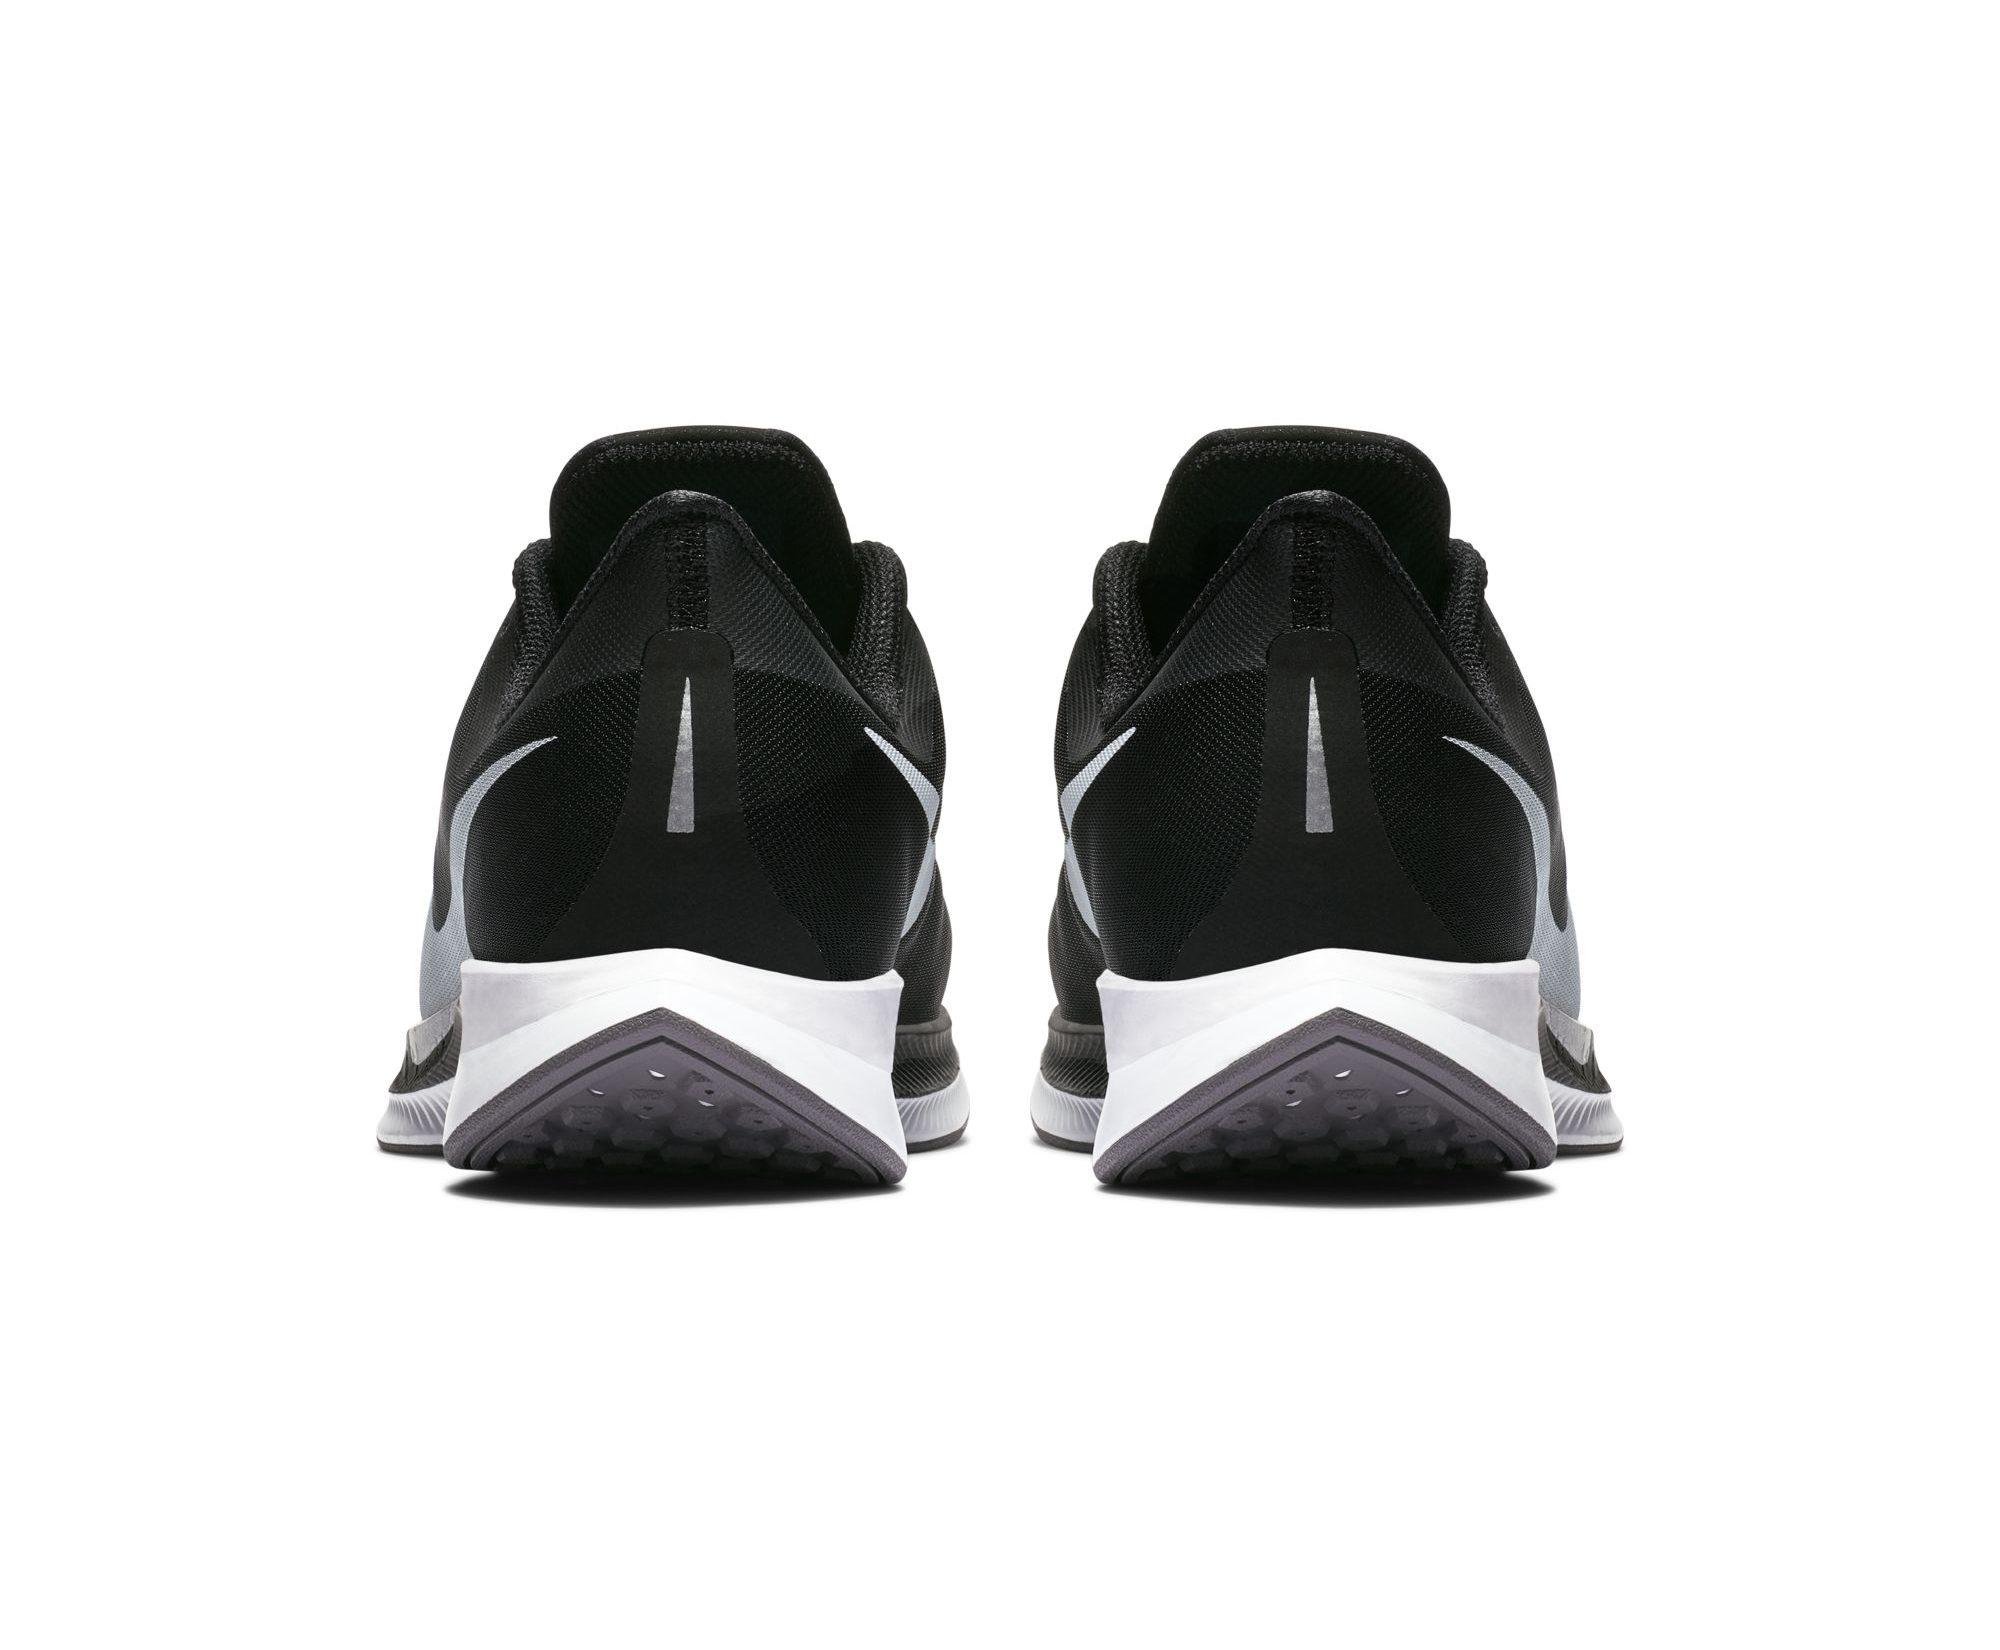 The Nike Zoom Pegasus Turbo 'Black/White' Drops Next Week - WearTesters